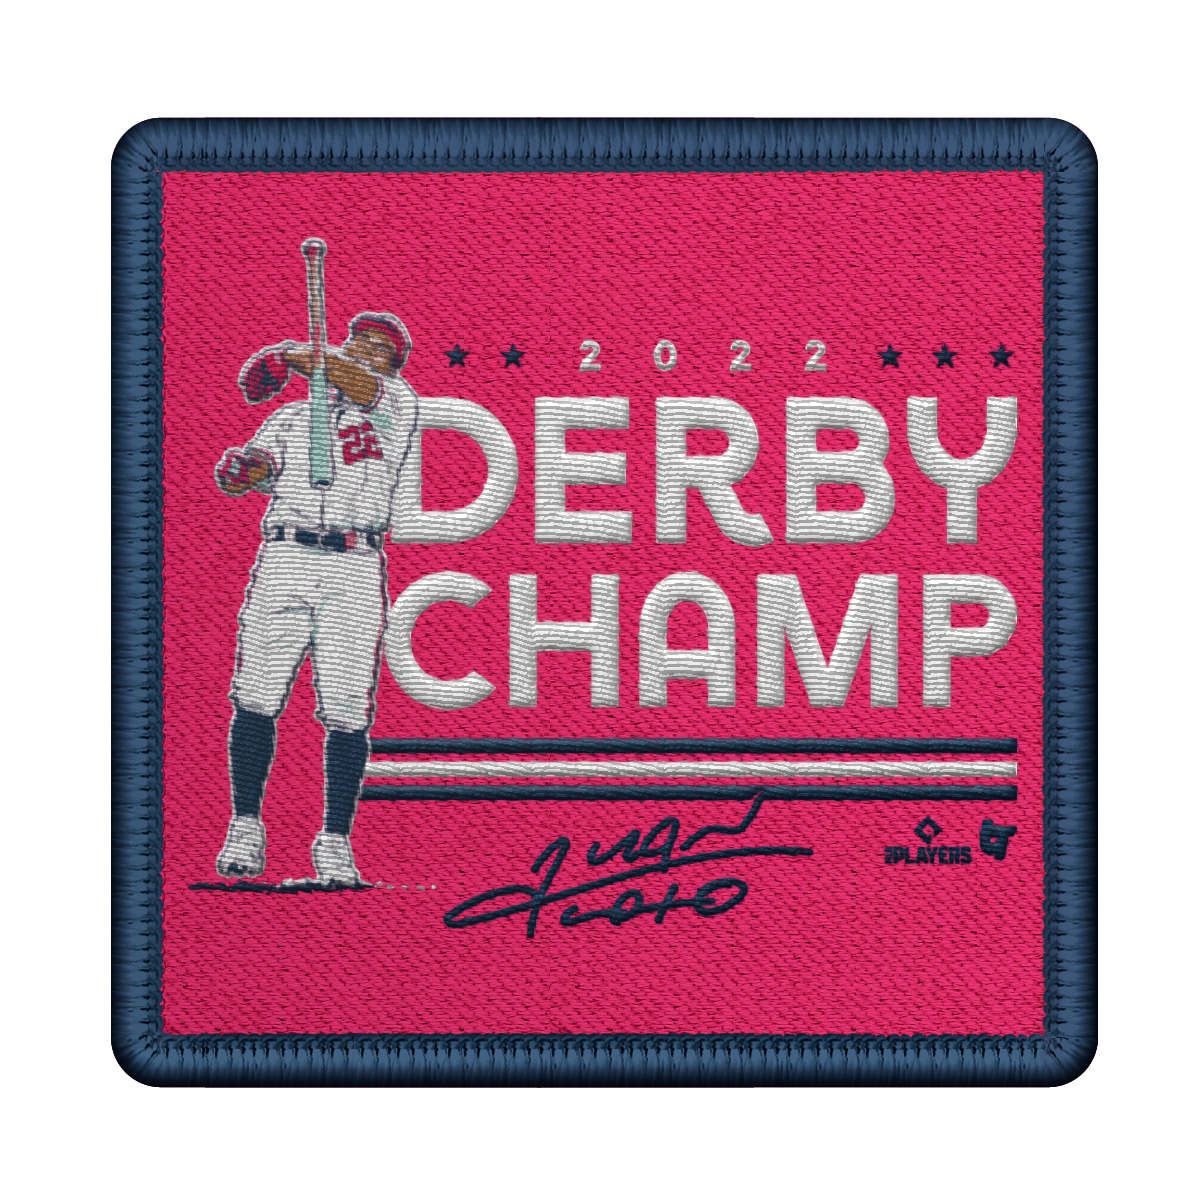 Juan Soto Jerseys, Juan Soto Gear, Home Run Derby Champion Merchandise